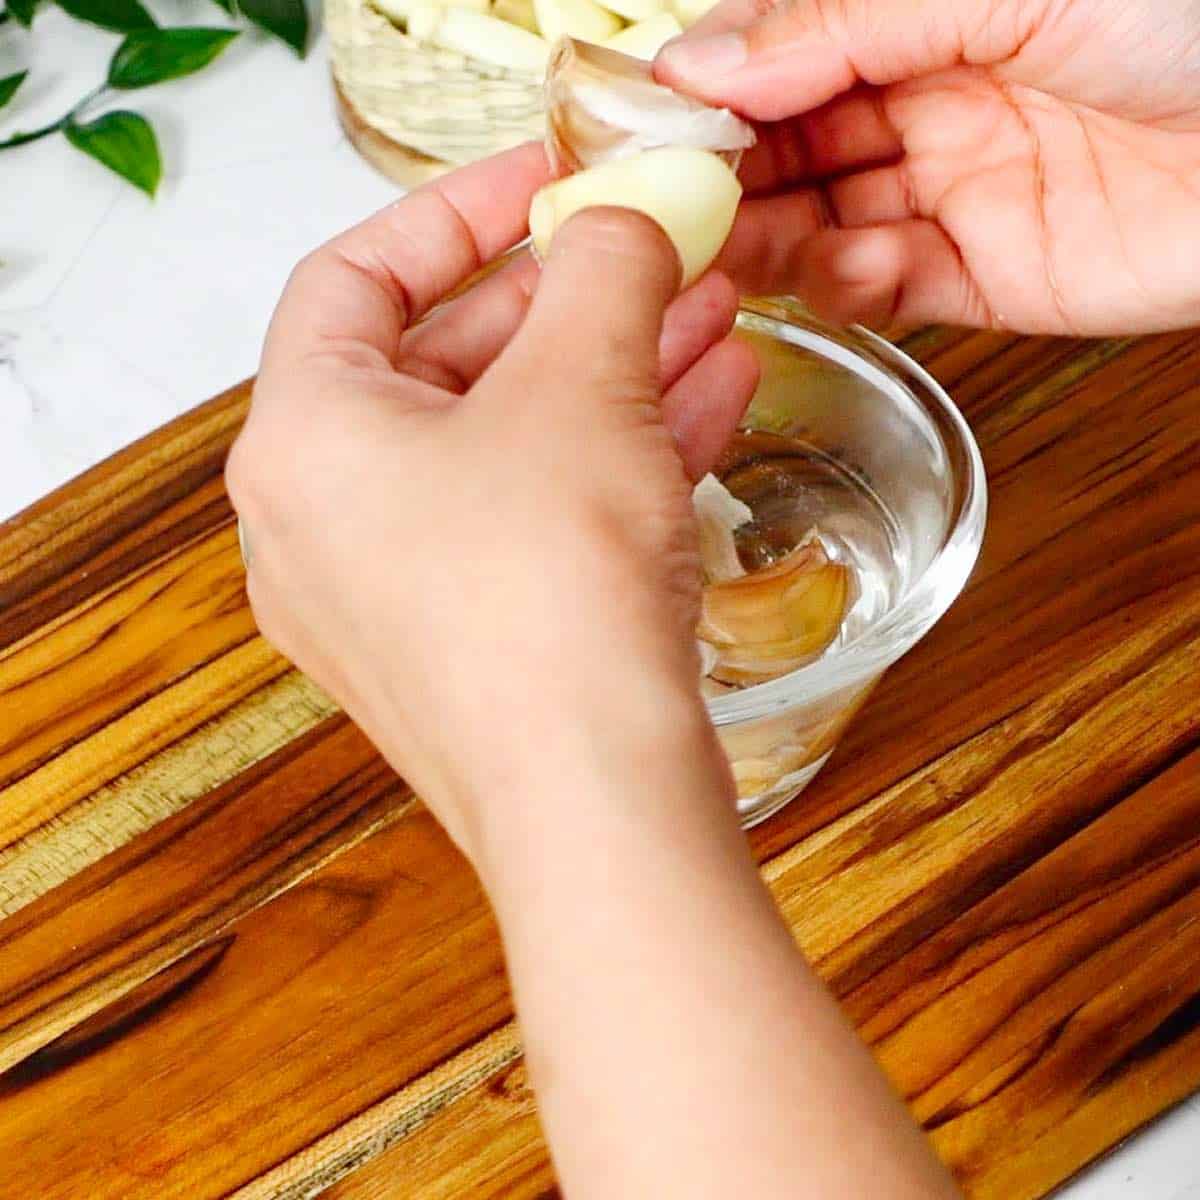 Removing the garlic peel.